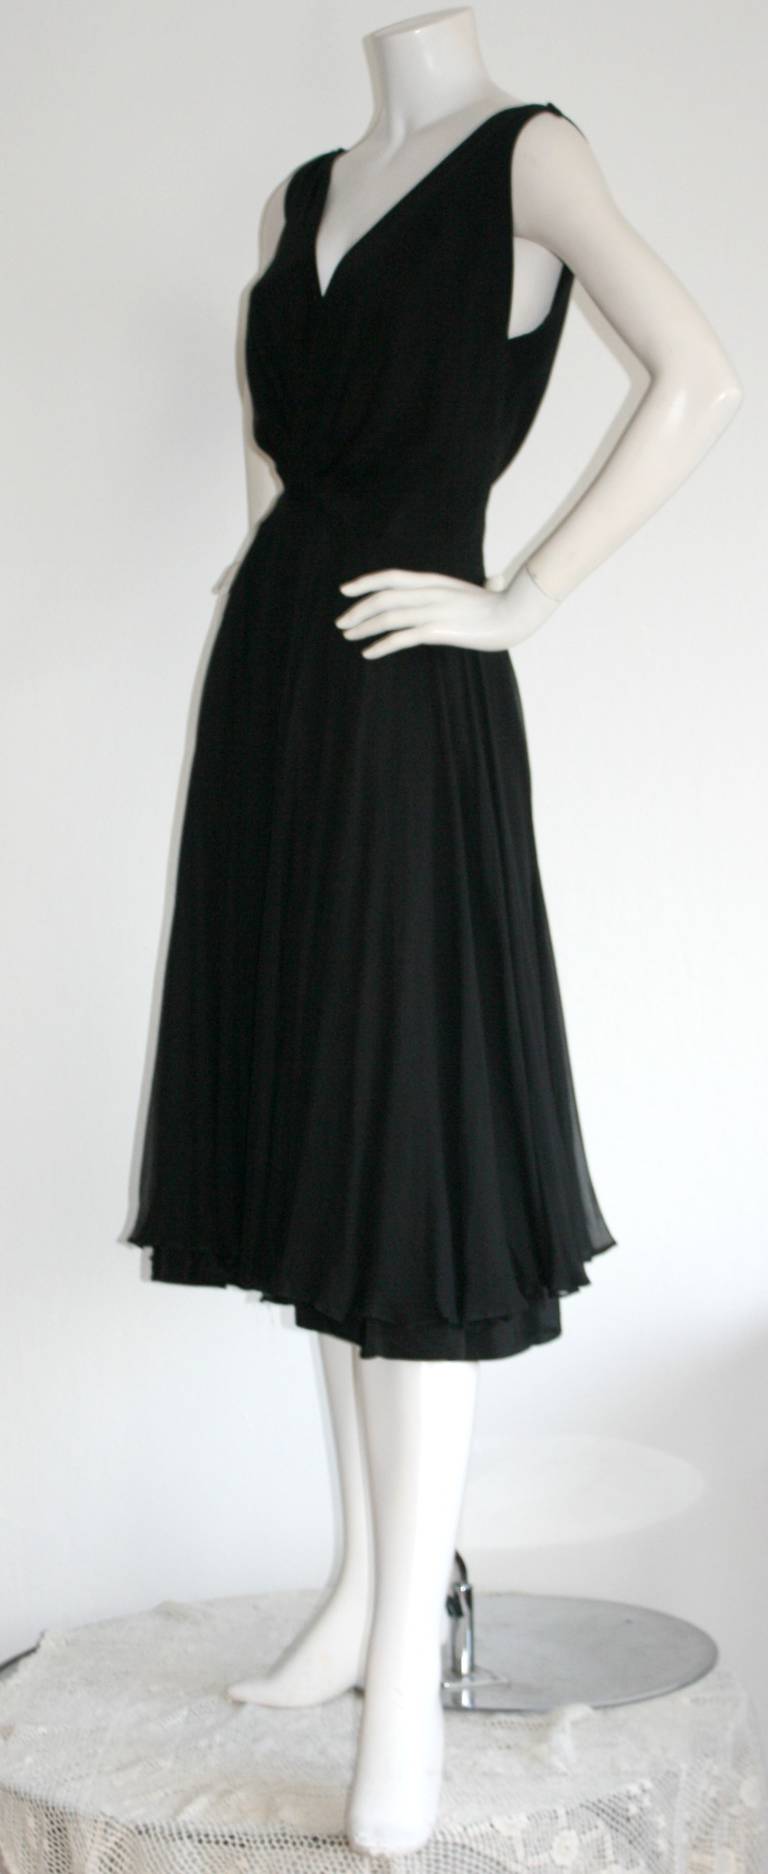 Spectacular I. Magnin 1950s Black Chiffon Dress Perfect Little Black Dress 1